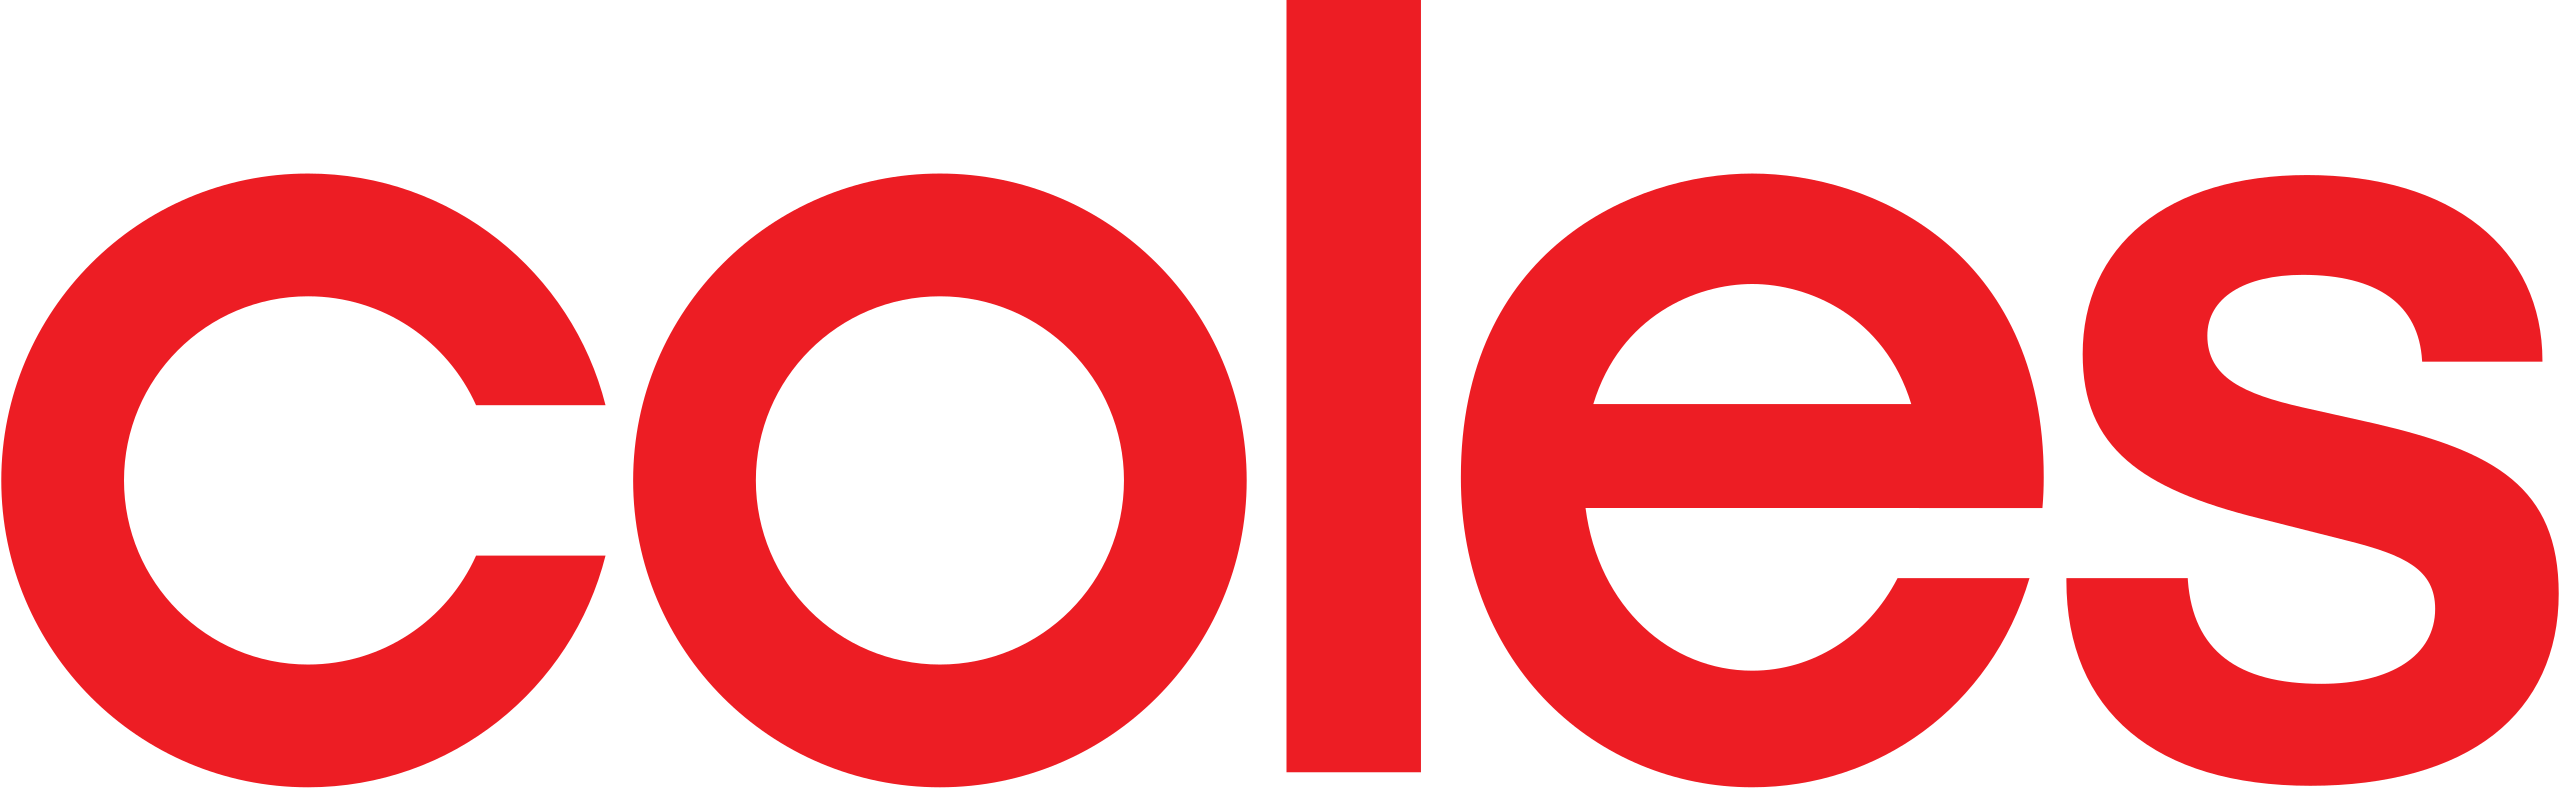 Coles_logo.svg